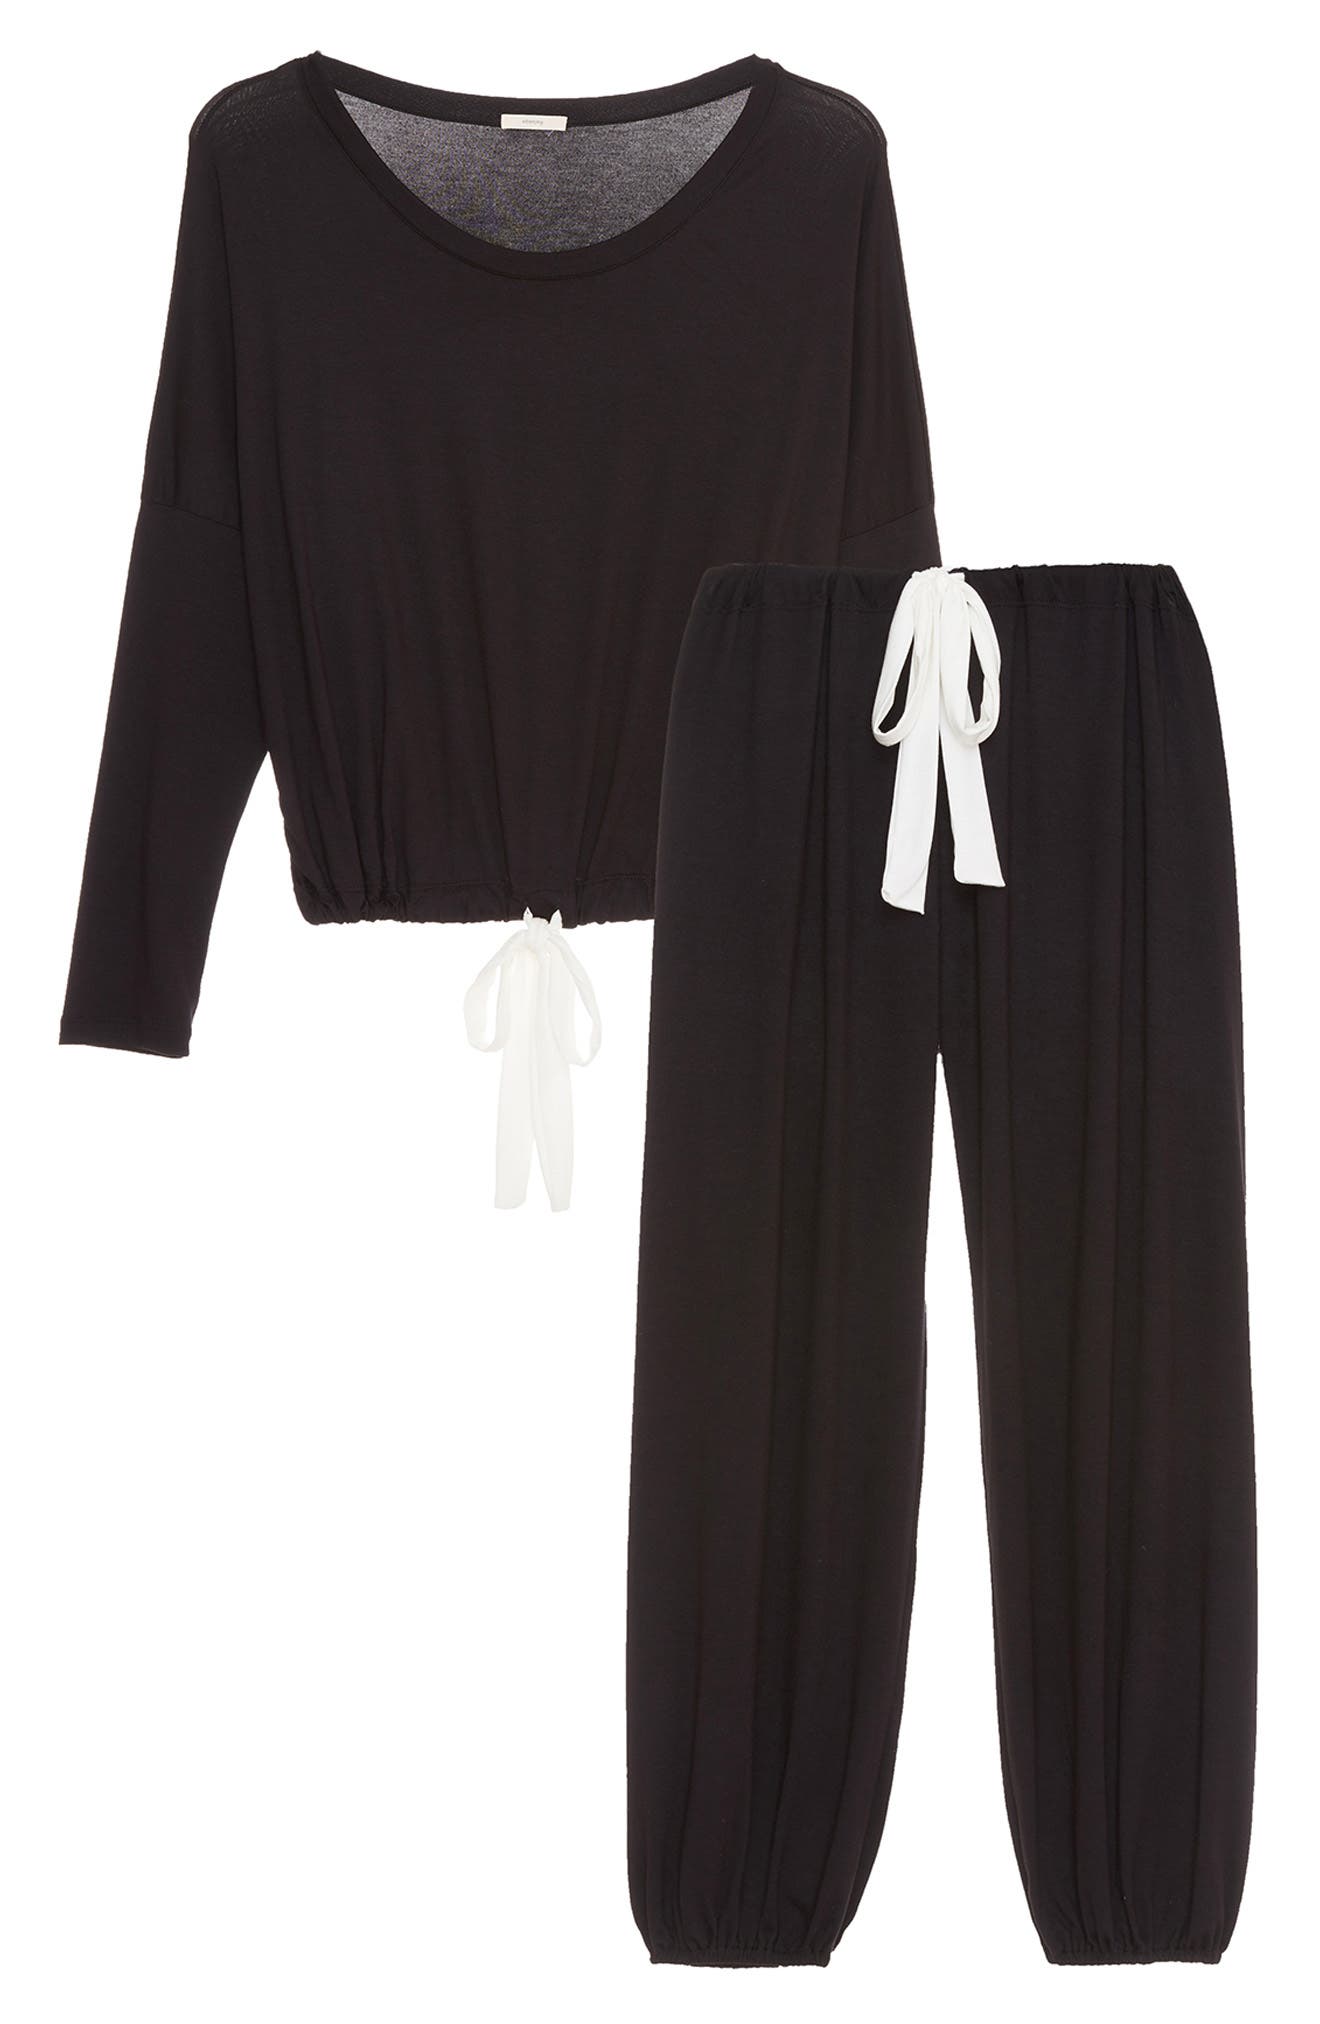 Gisele Modal Women's Pajama Slouchy Set Long Sleeve Top w Scoop Neckline 